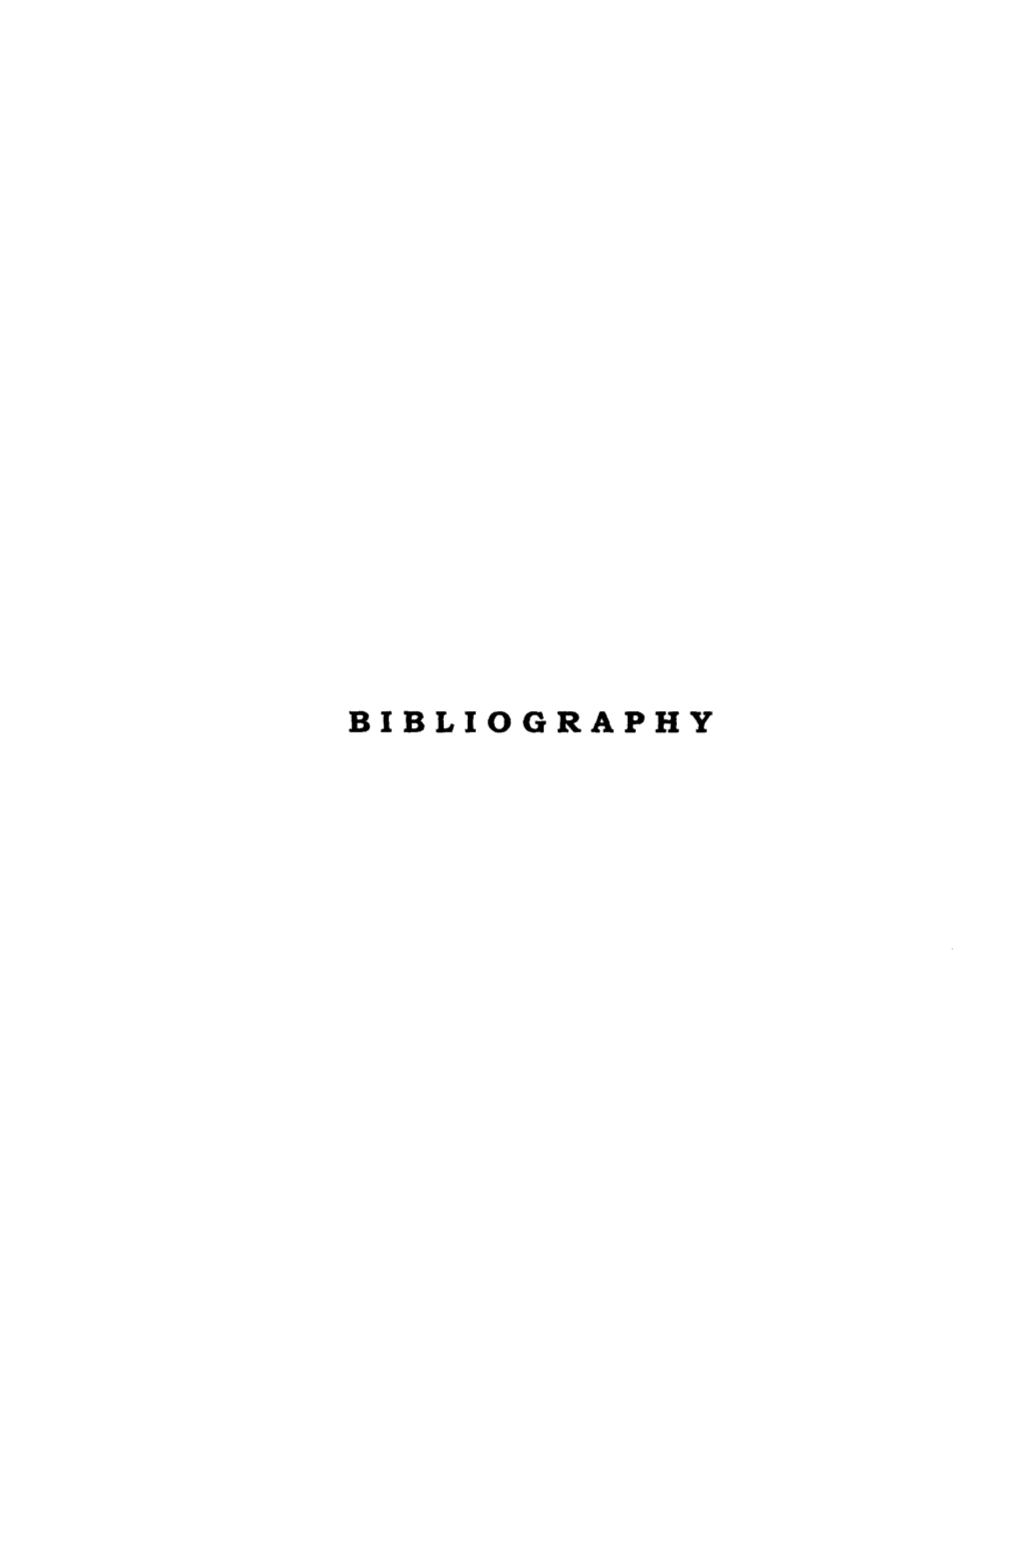 Bibliography Bibliography